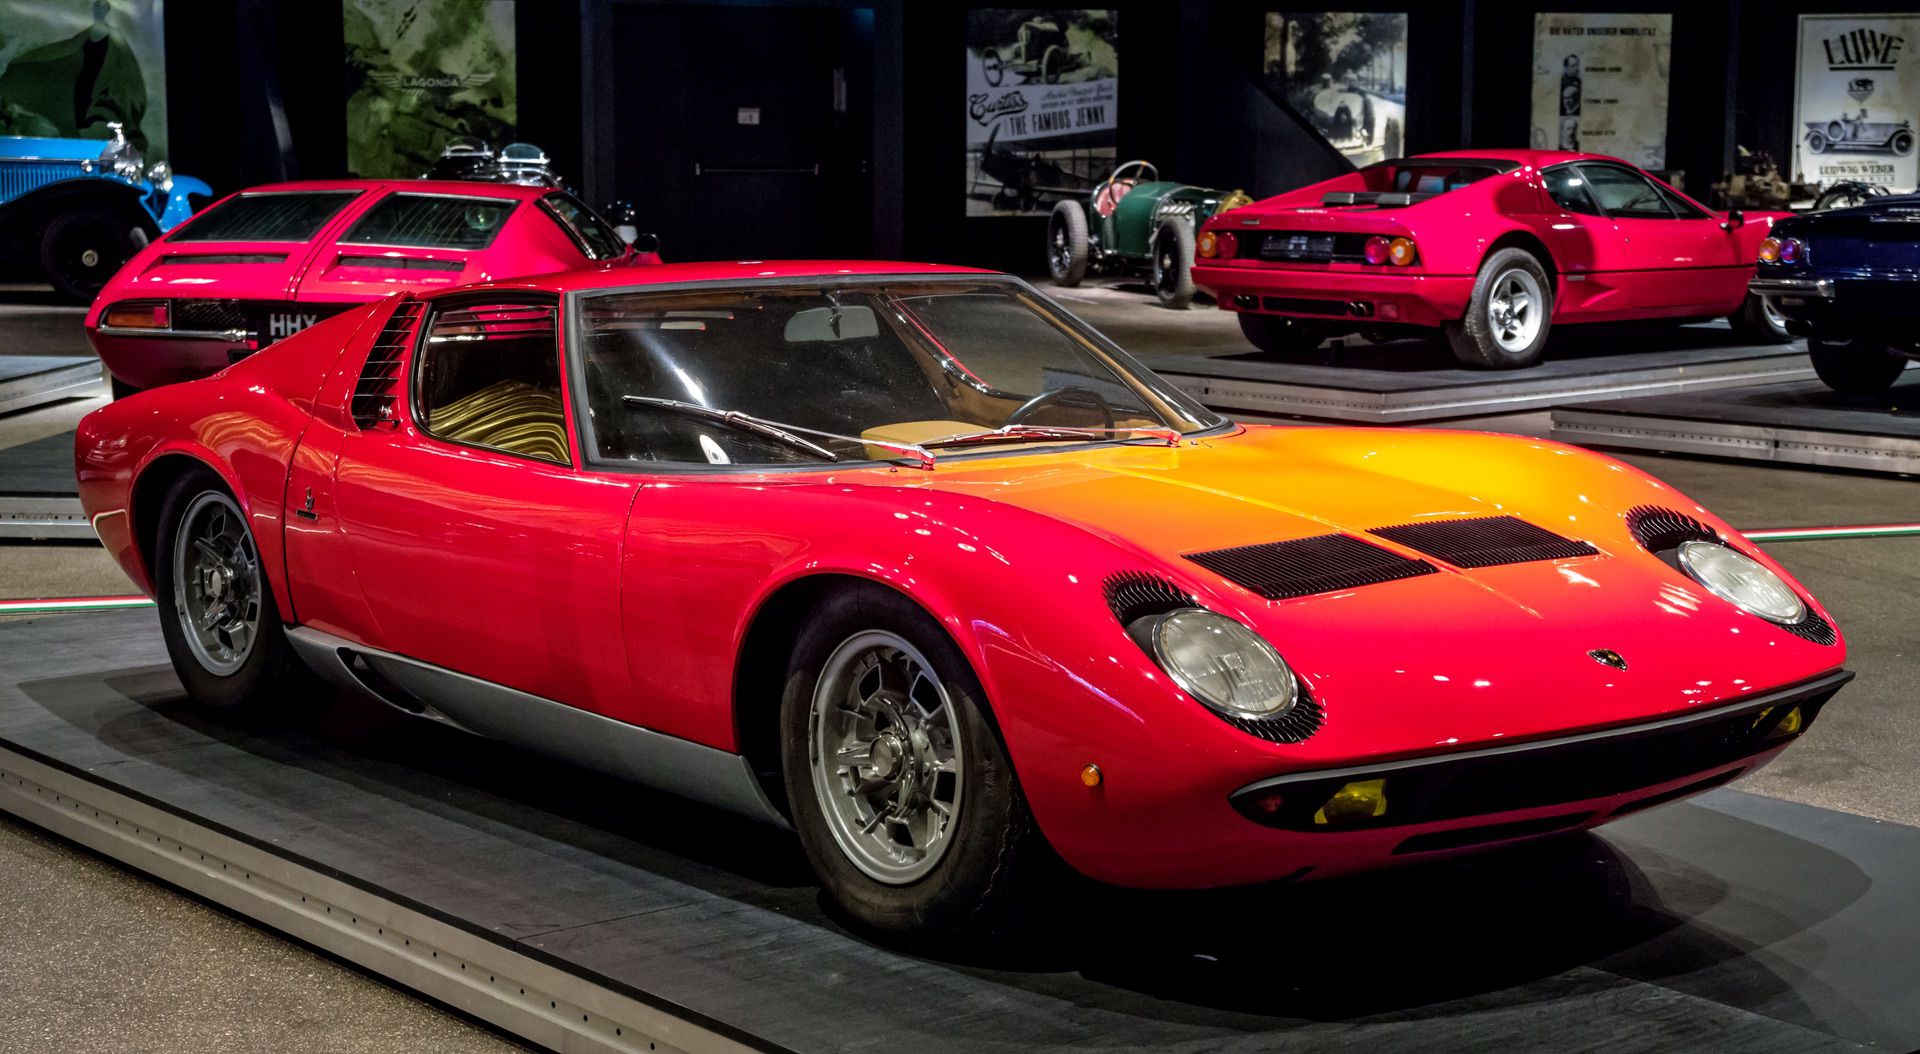 The First Supercar: The Lamborghini Miura